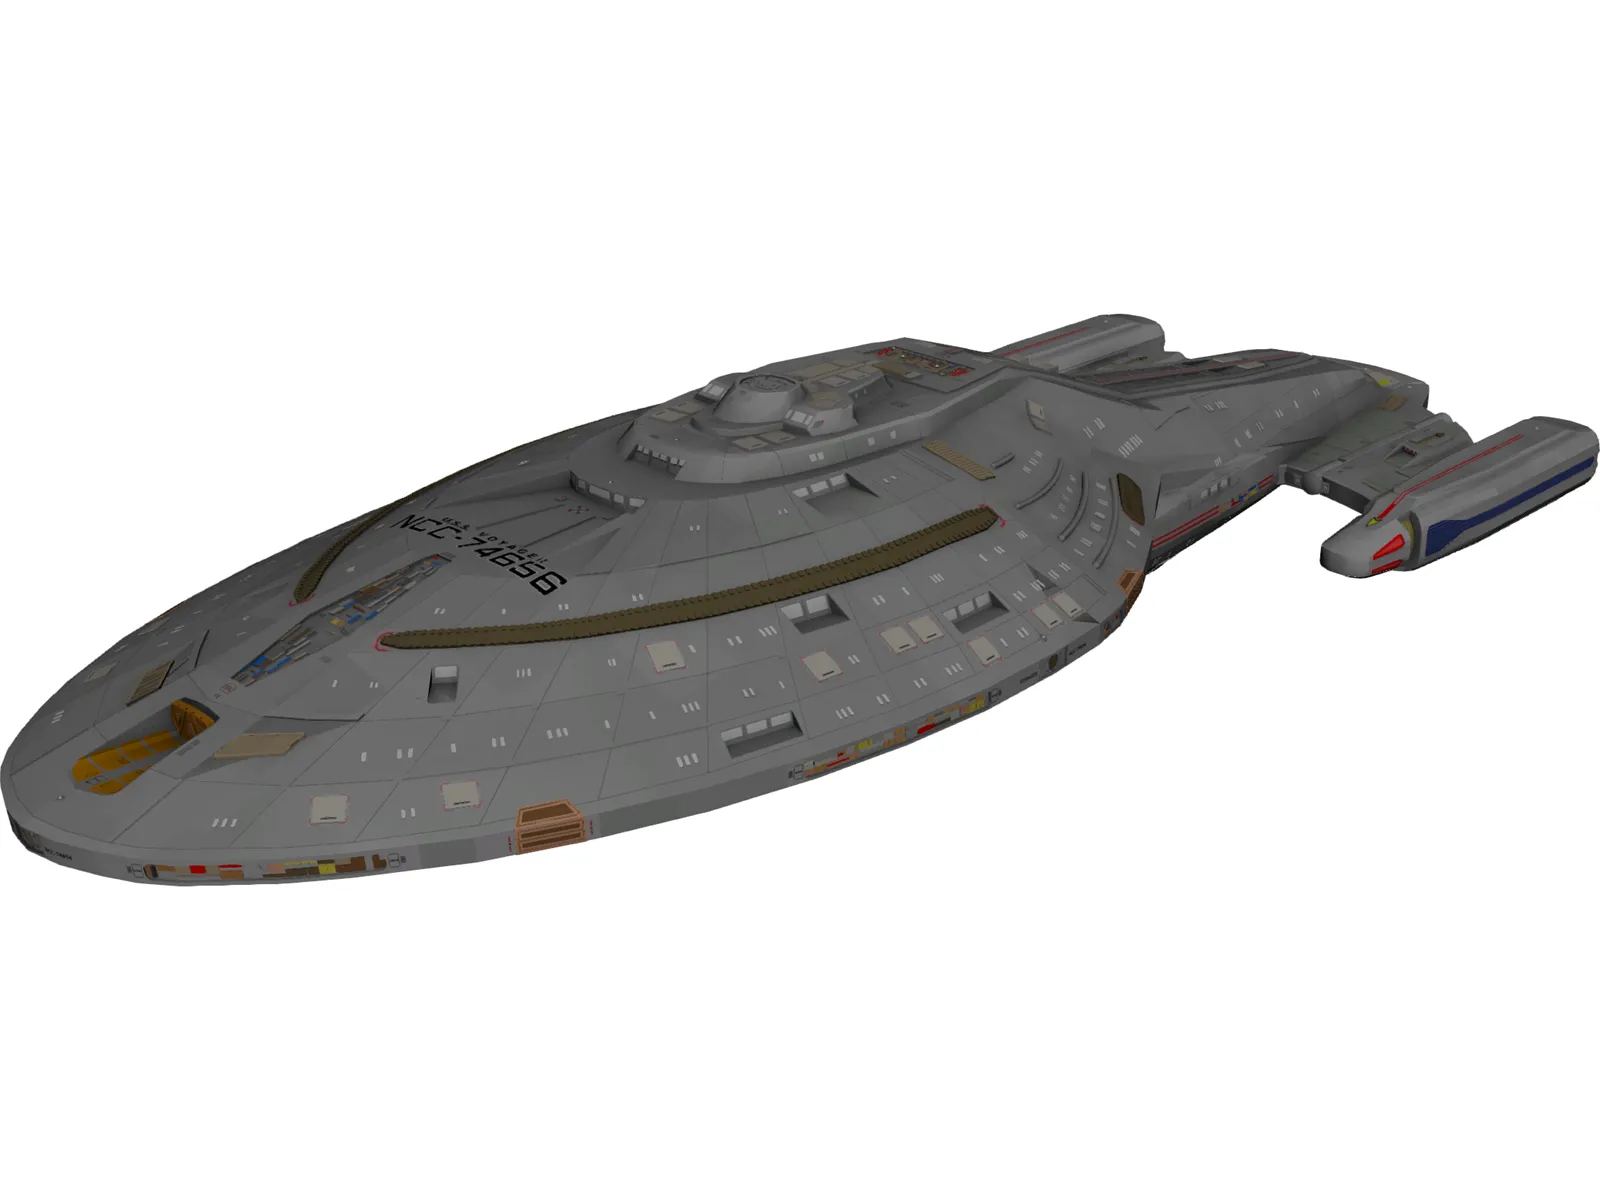 Star Trek Voyager NCC 74656 3D Model